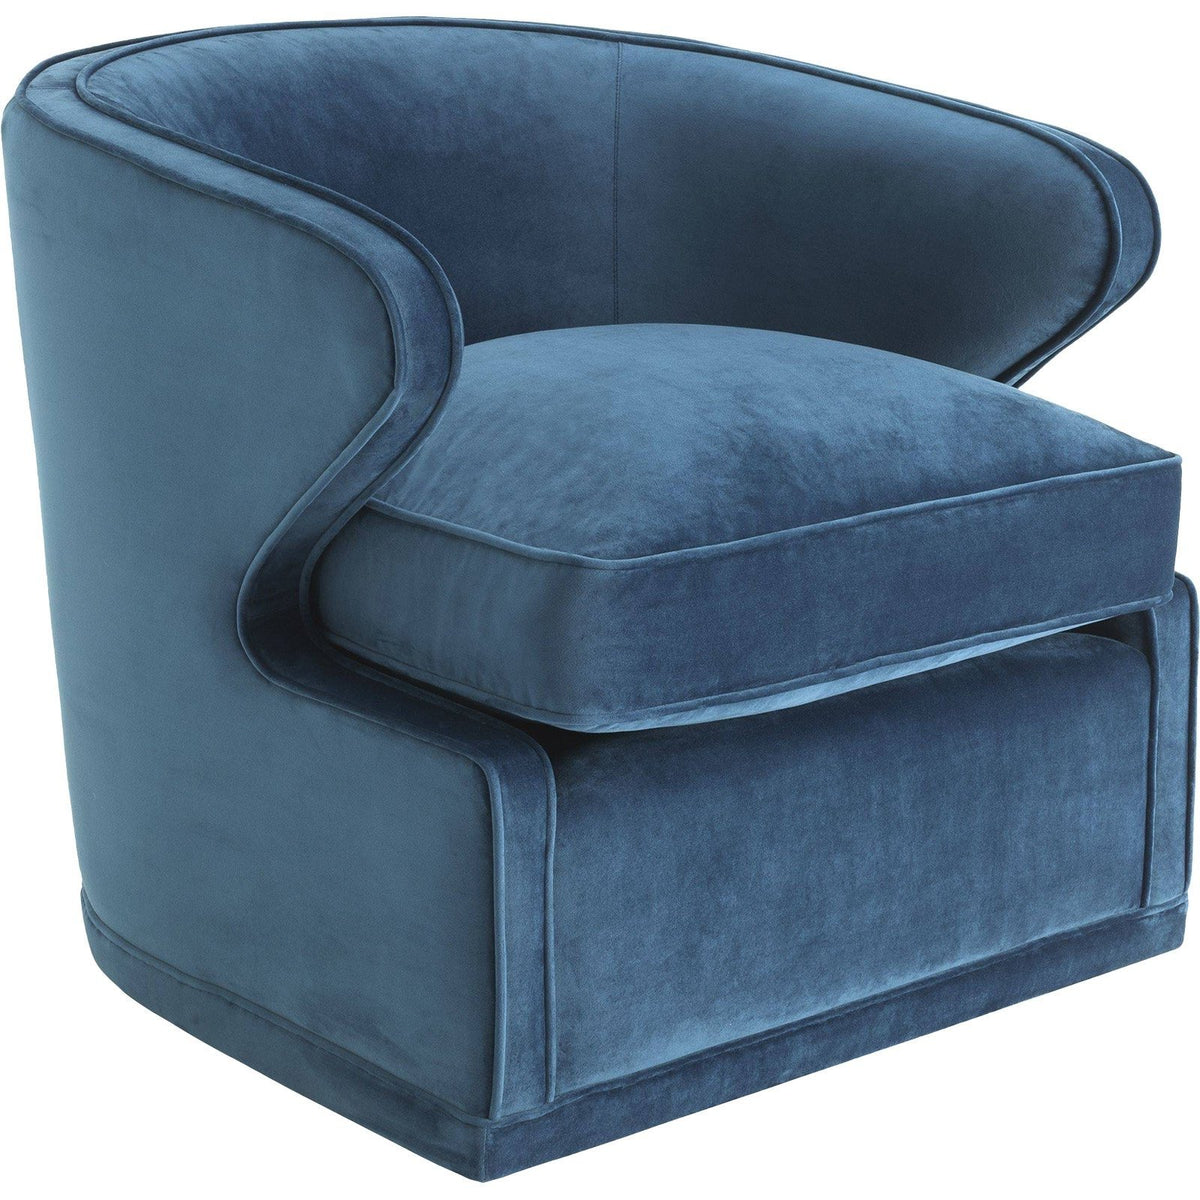 Dorset Chair - Blue